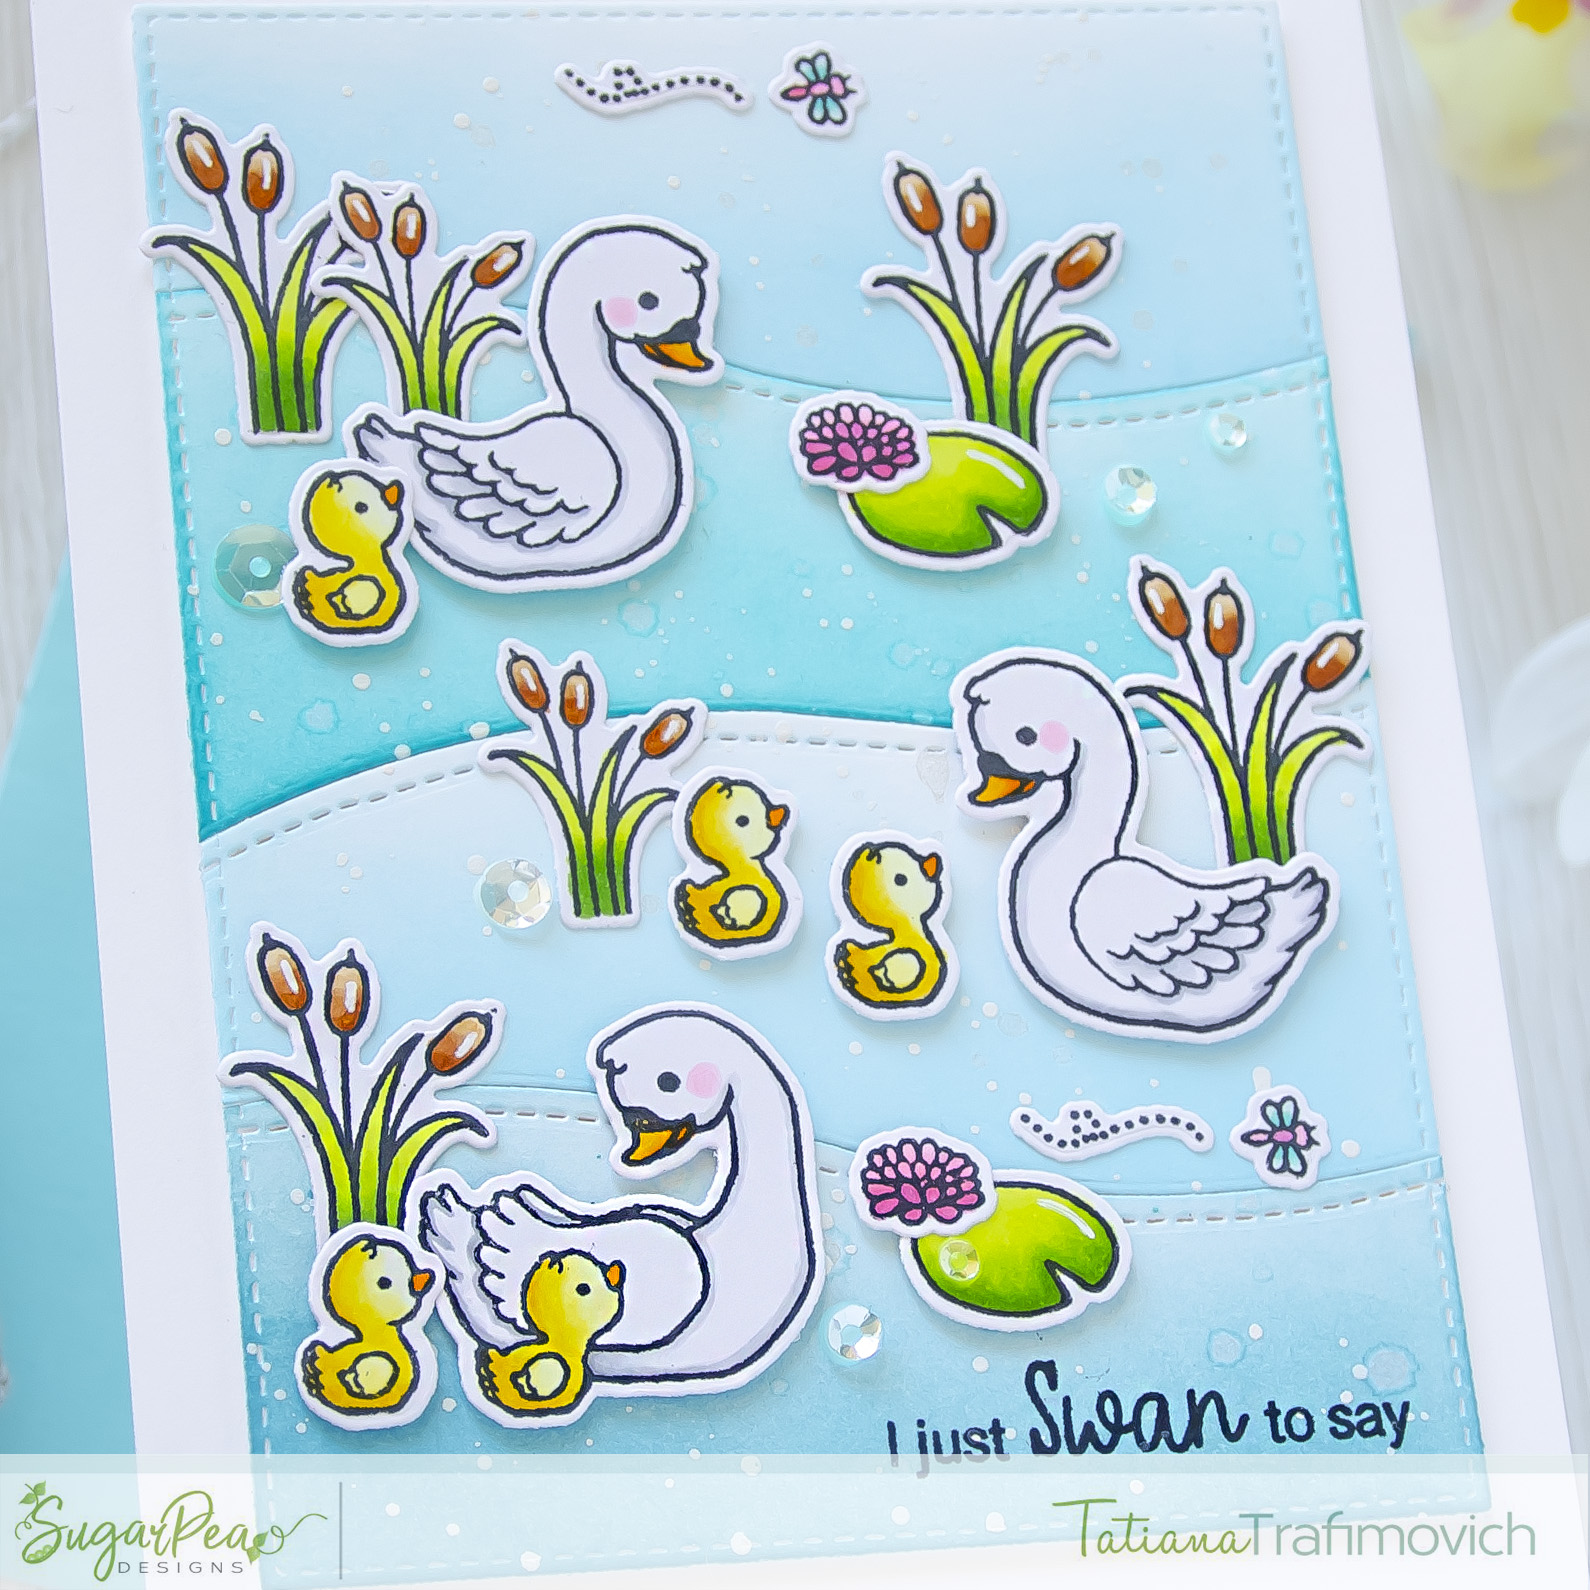 I Just SWAN To Say #handmade card by Tatiana Trafimovich #tatianacraftandart - Sweet Swans stamp set by SugarPea Designs #sugarpeadesigns